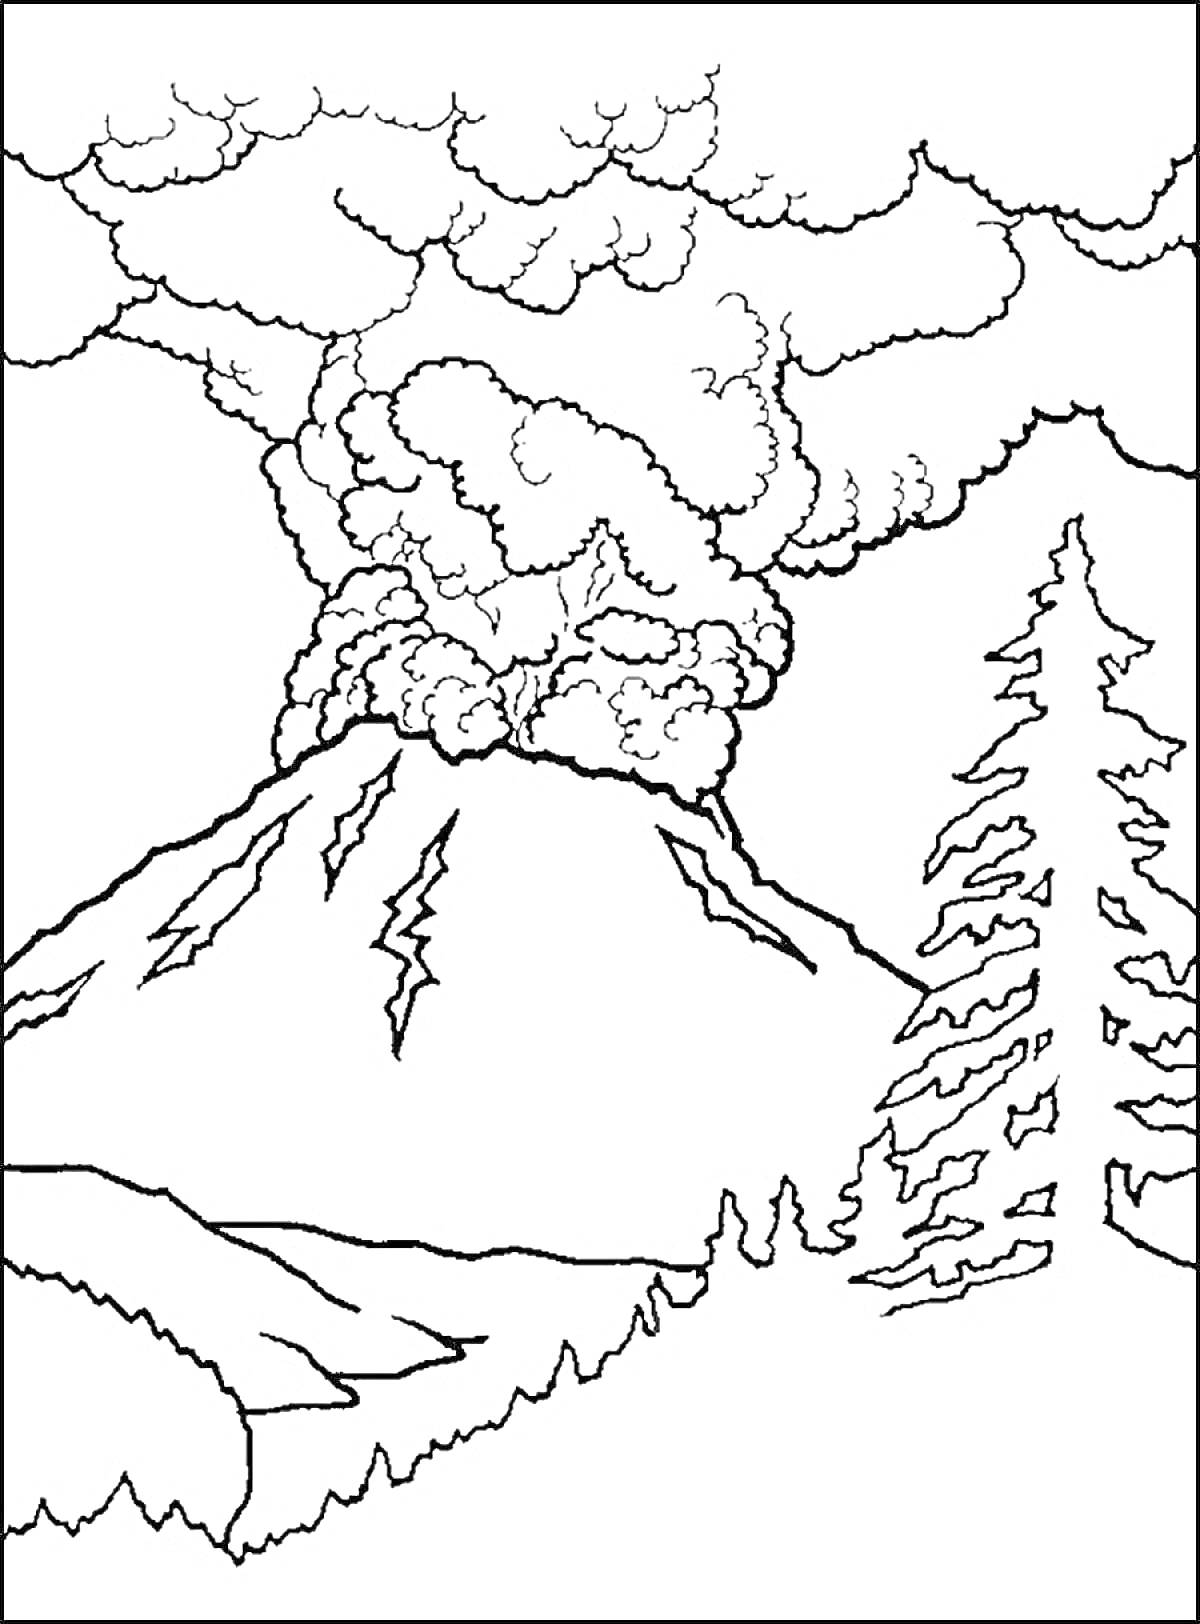 Извержение вулкана среди леса с облаками дыма на небе и елями на переднем плане